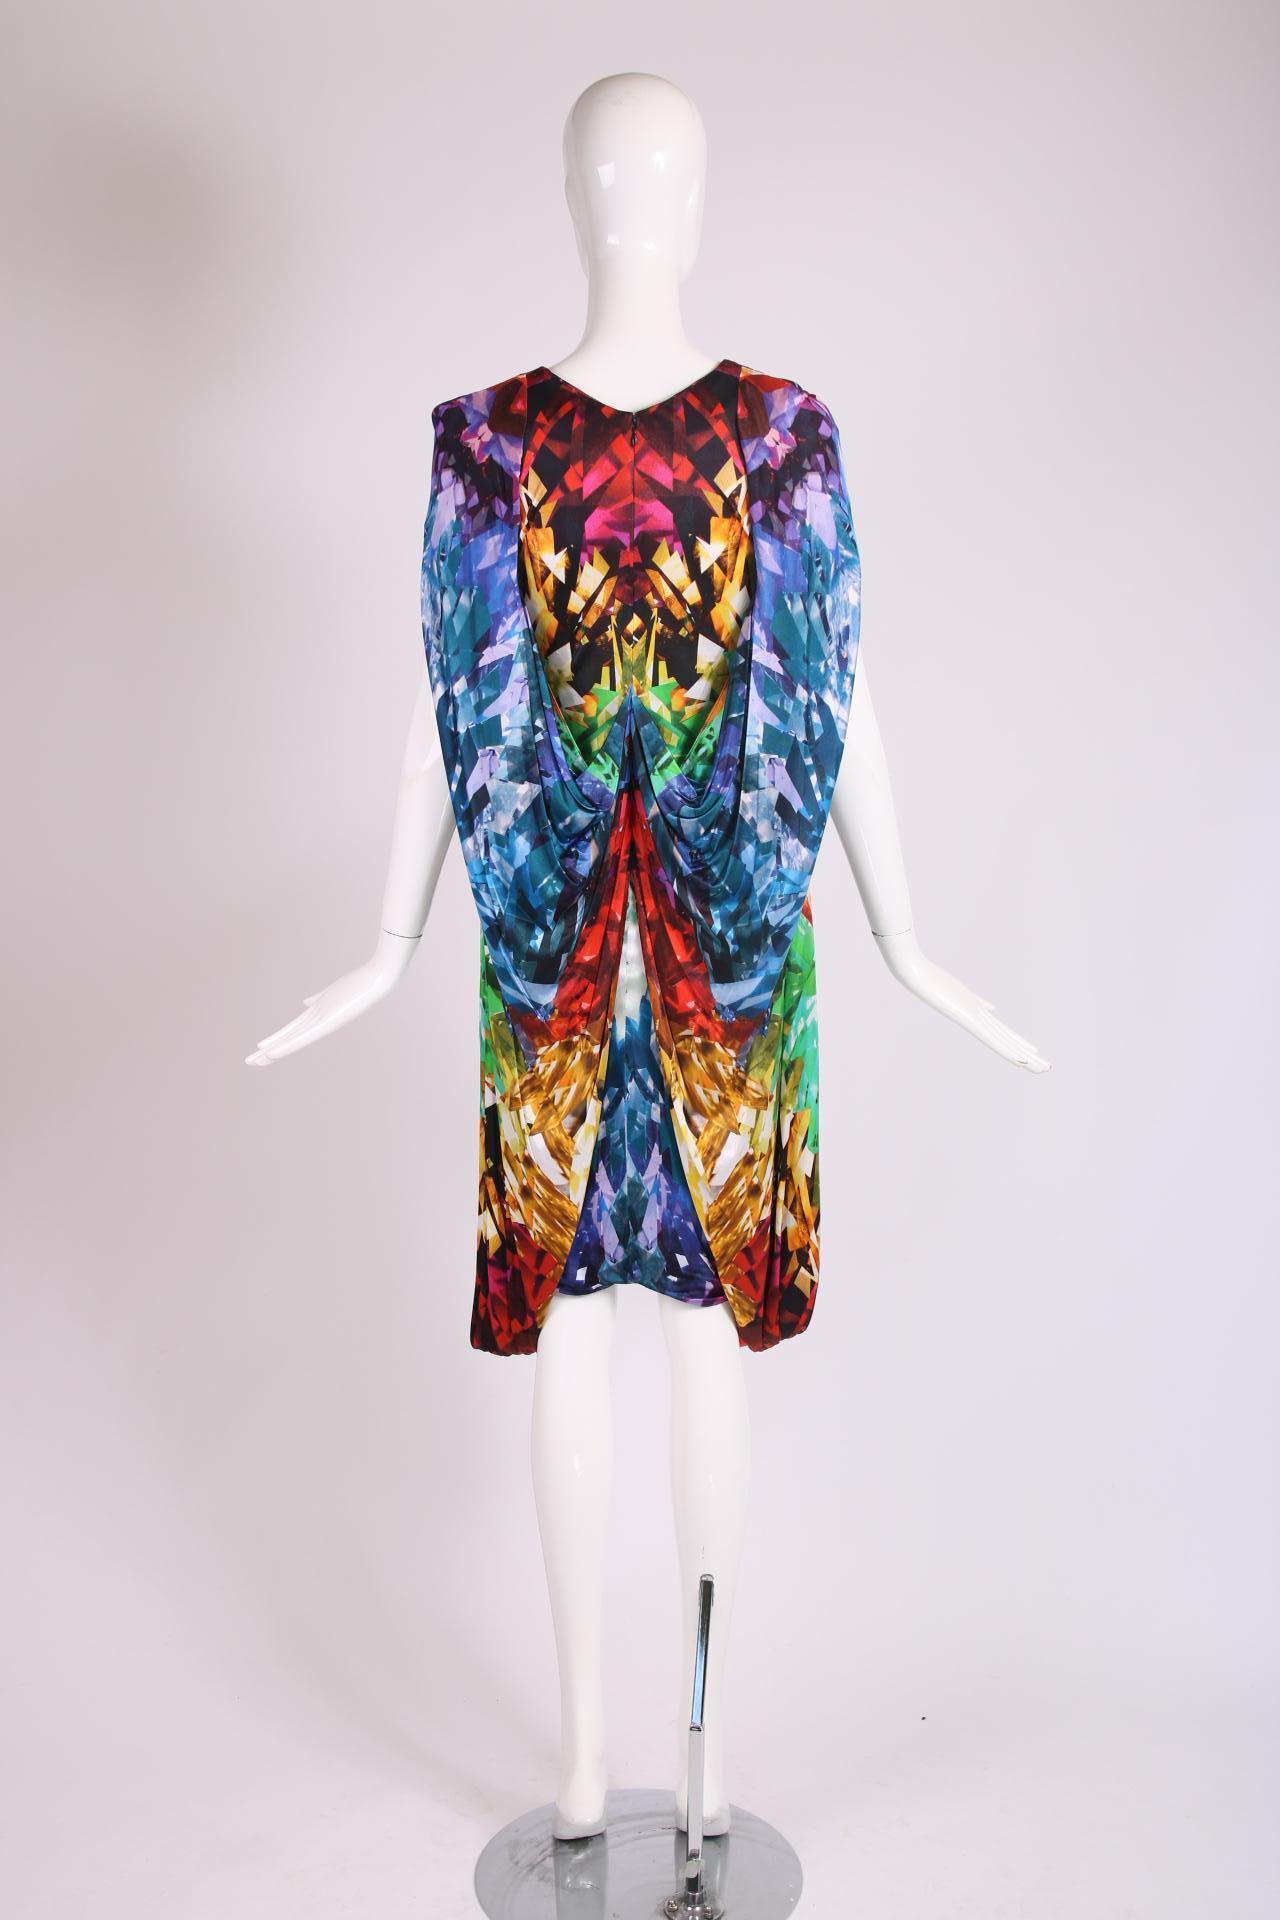 Women's Alexander McQueen Crystal Kaleidoscope Dress w/Cape S/S 2009 Natural Distinction For Sale